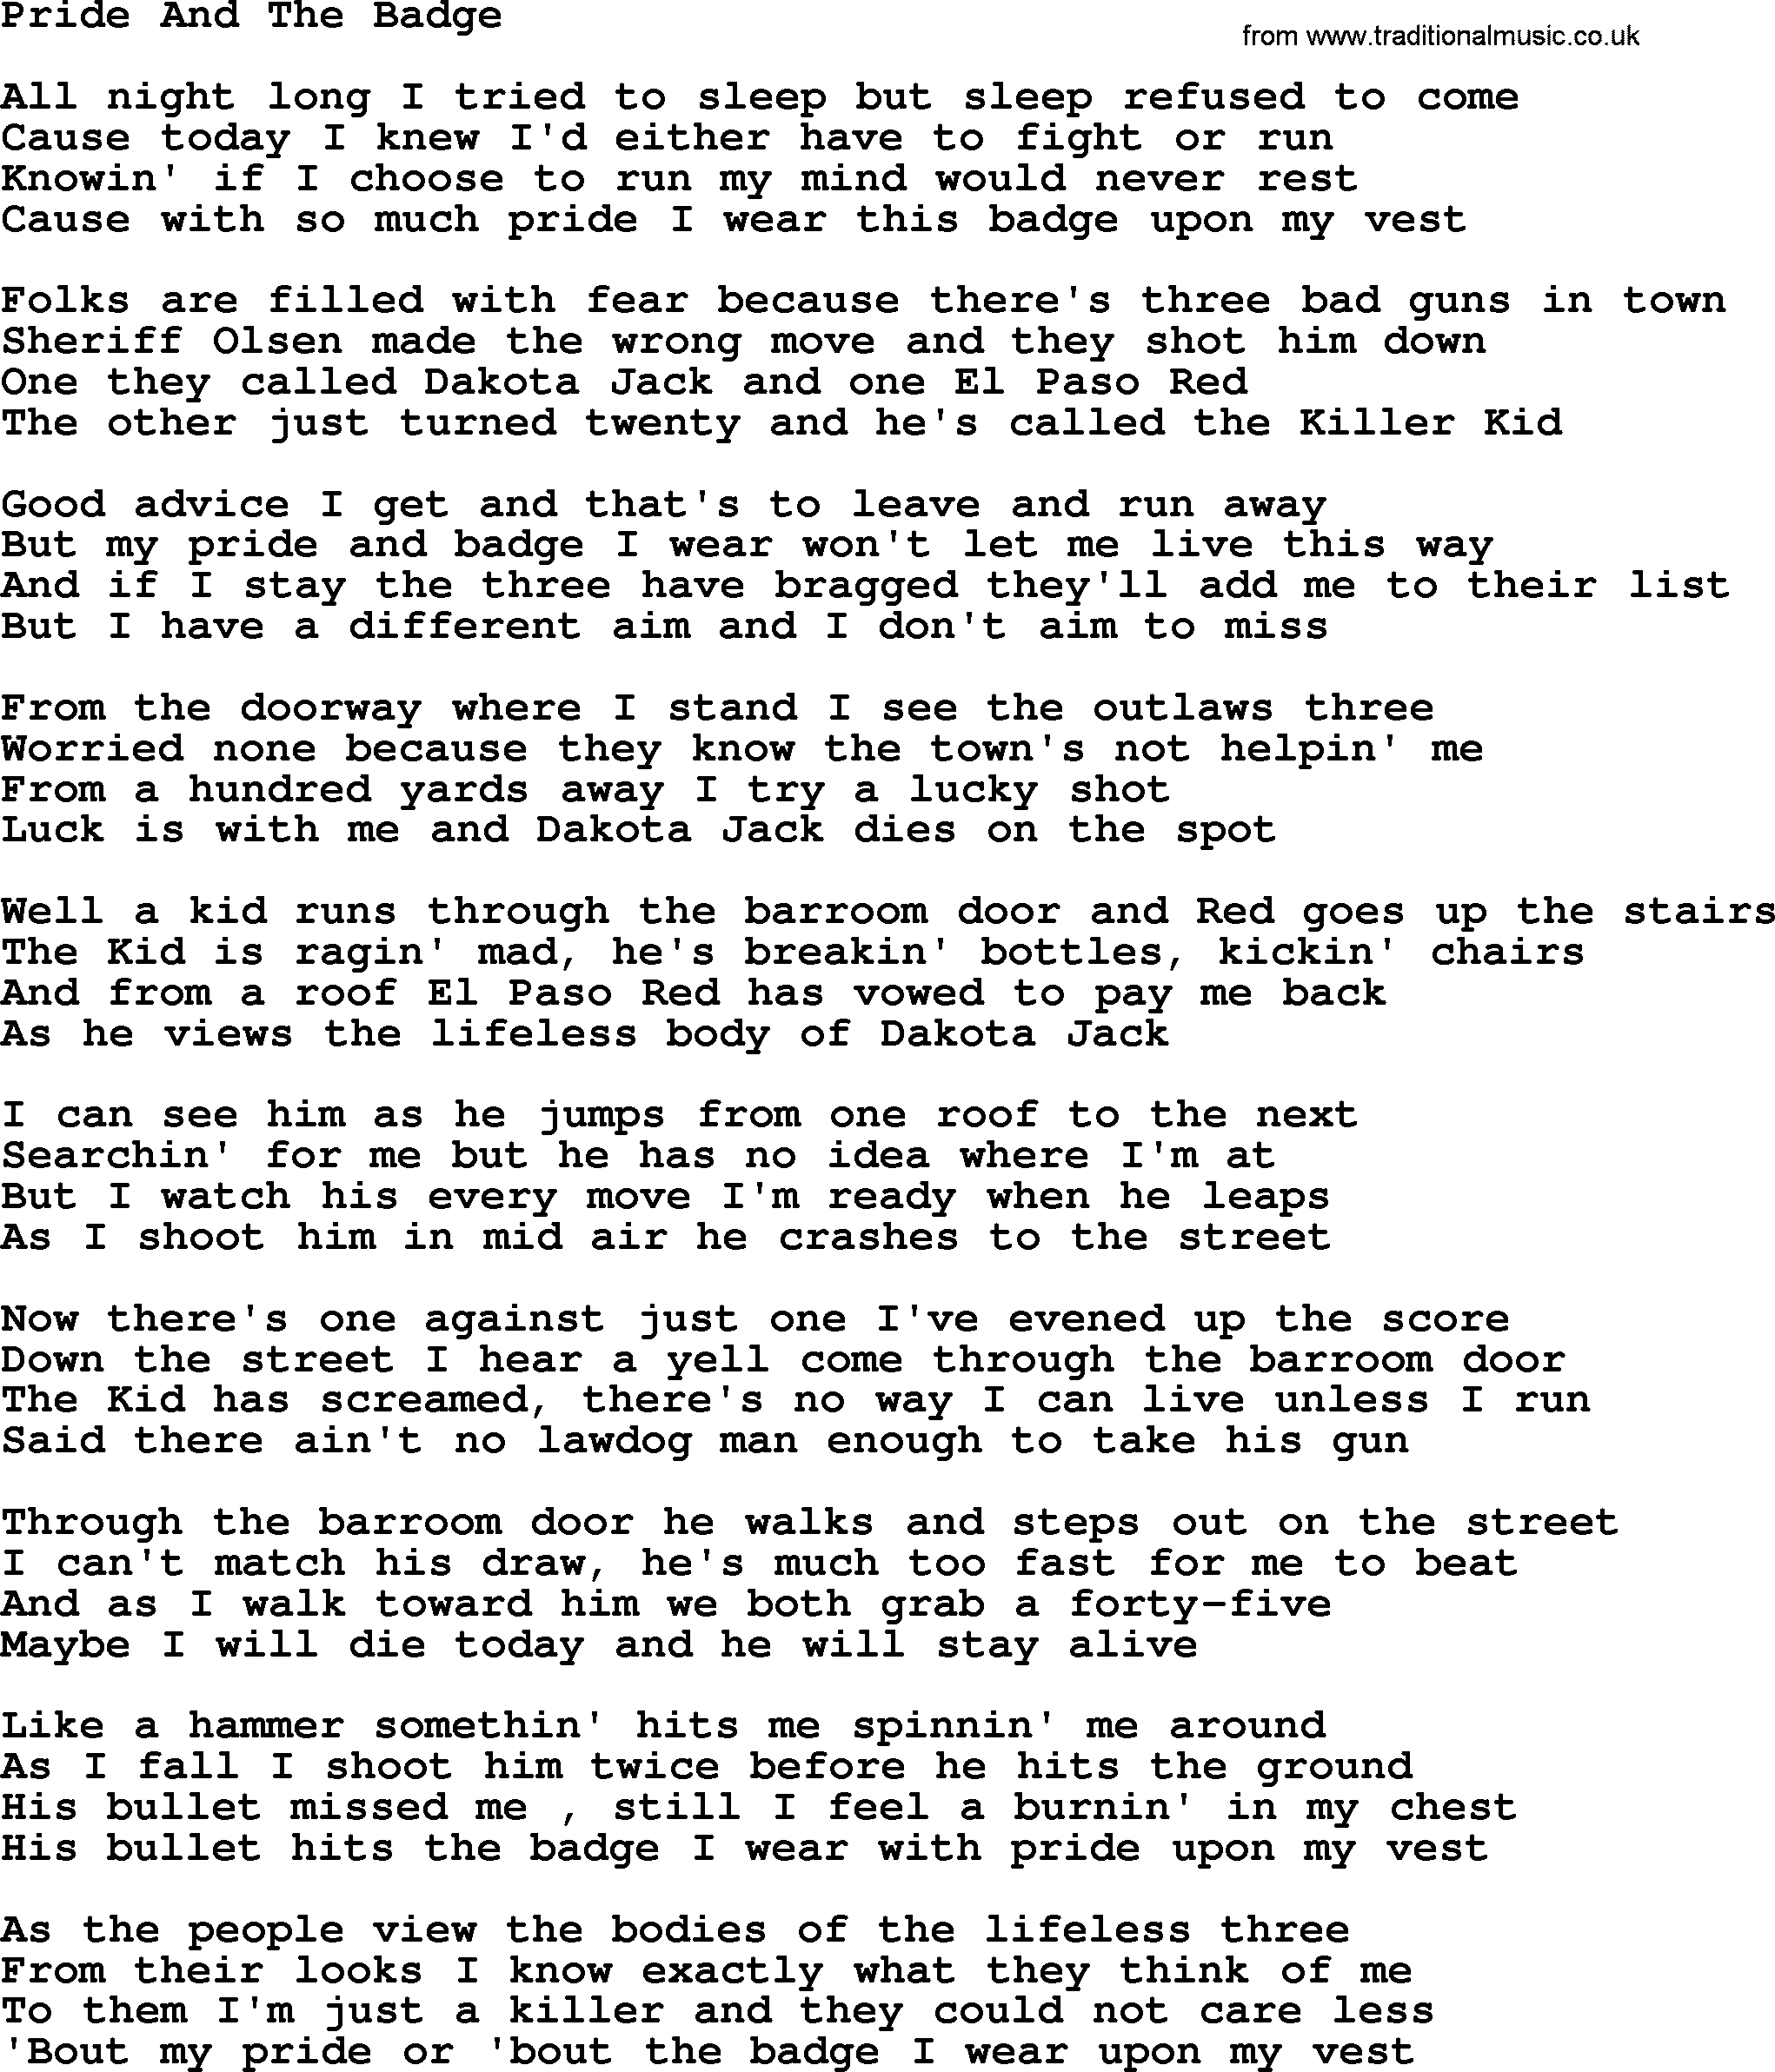 Marty Robbins song: Pride And The Badge, lyrics